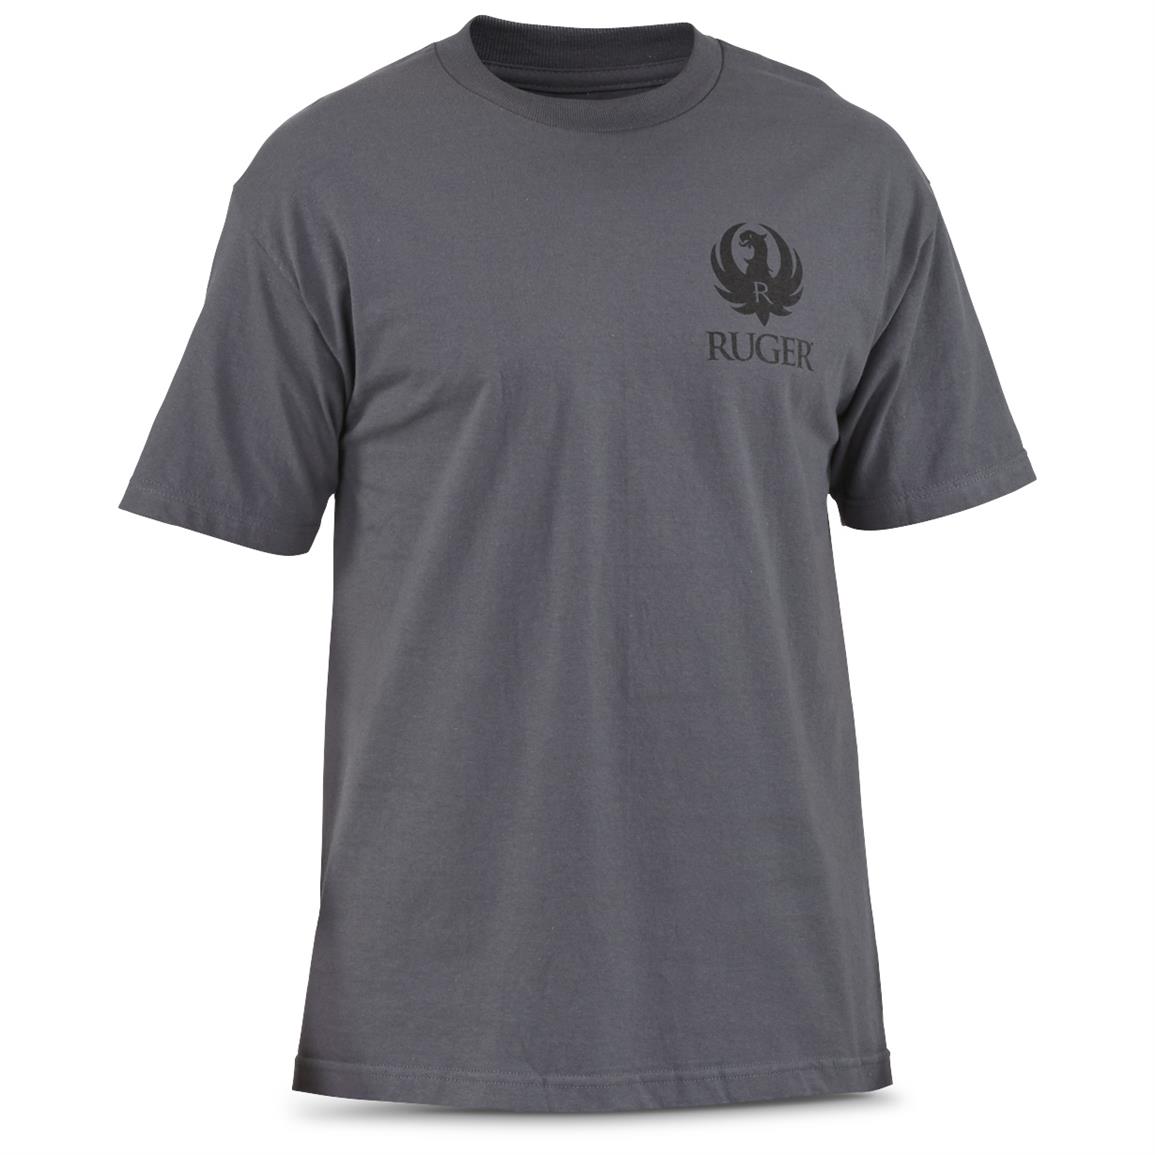 Download Ruger Men's Logo Camo Stitch T-Shirt - 658156, T-Shirts at ...